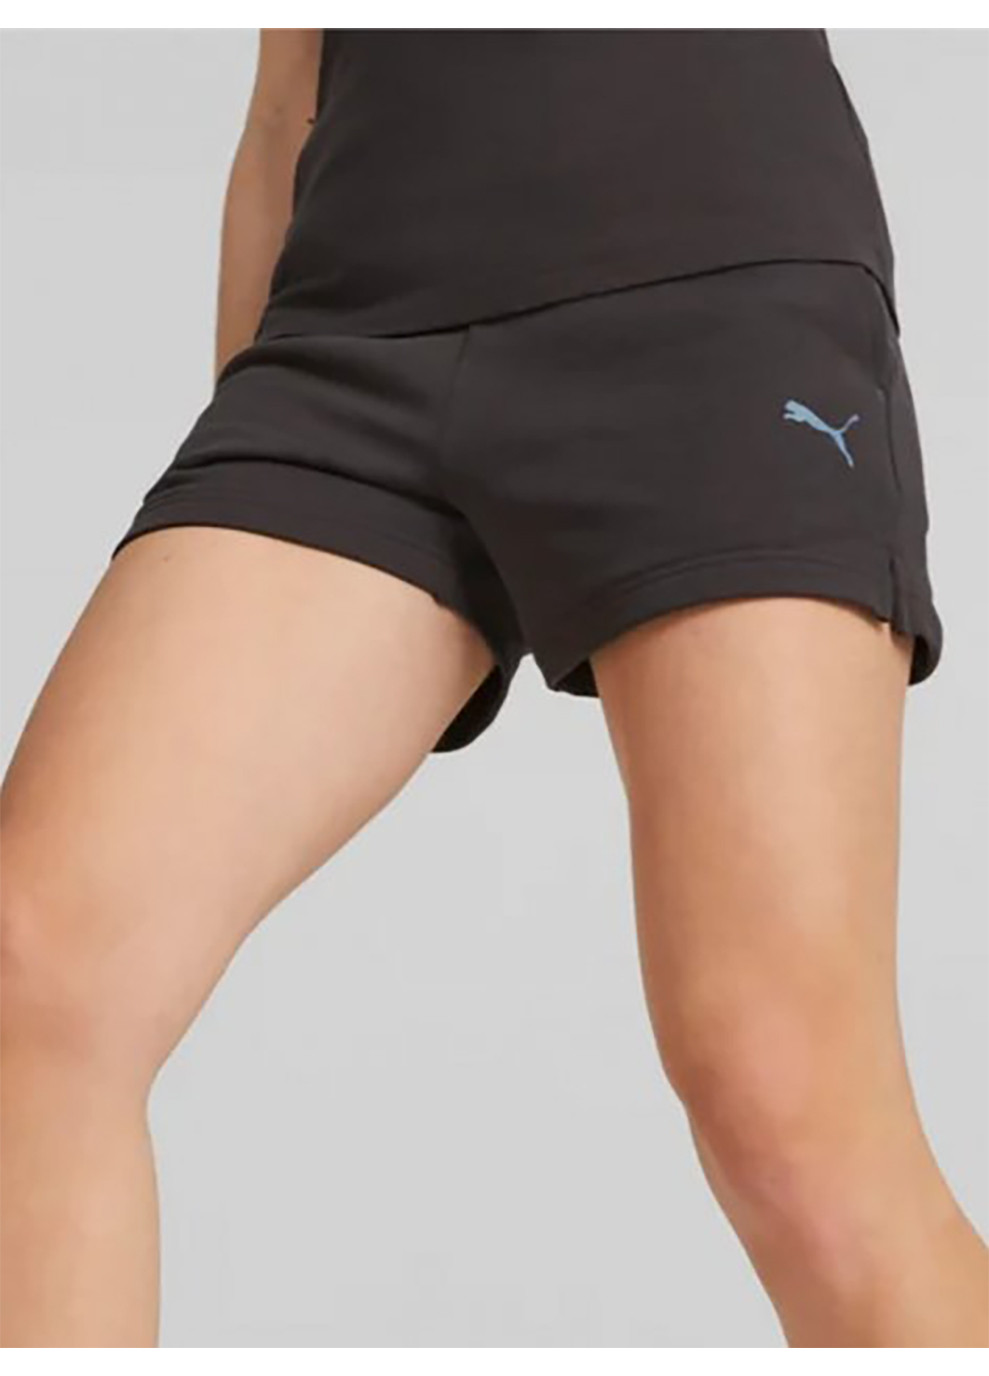 Cпортивные шорты Ess Better Shorts Flat Dark Gray Серый Puma (260946386)